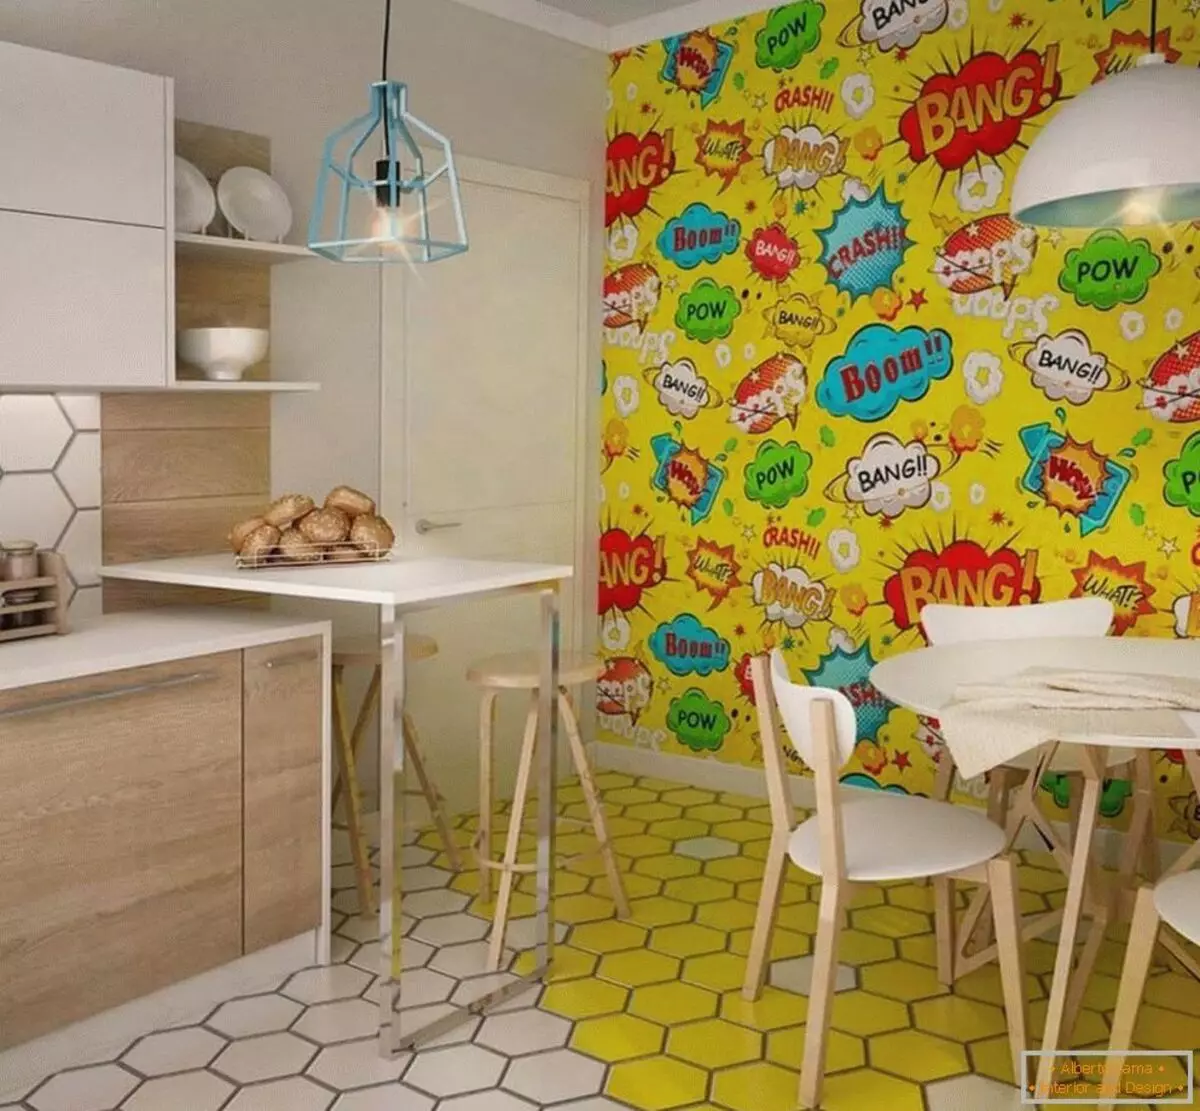 Cucine in una Panel House (61 foto): Opzioni per interni Design di cucine di piccole dimensioni, sfumature di programmazione 9476_48